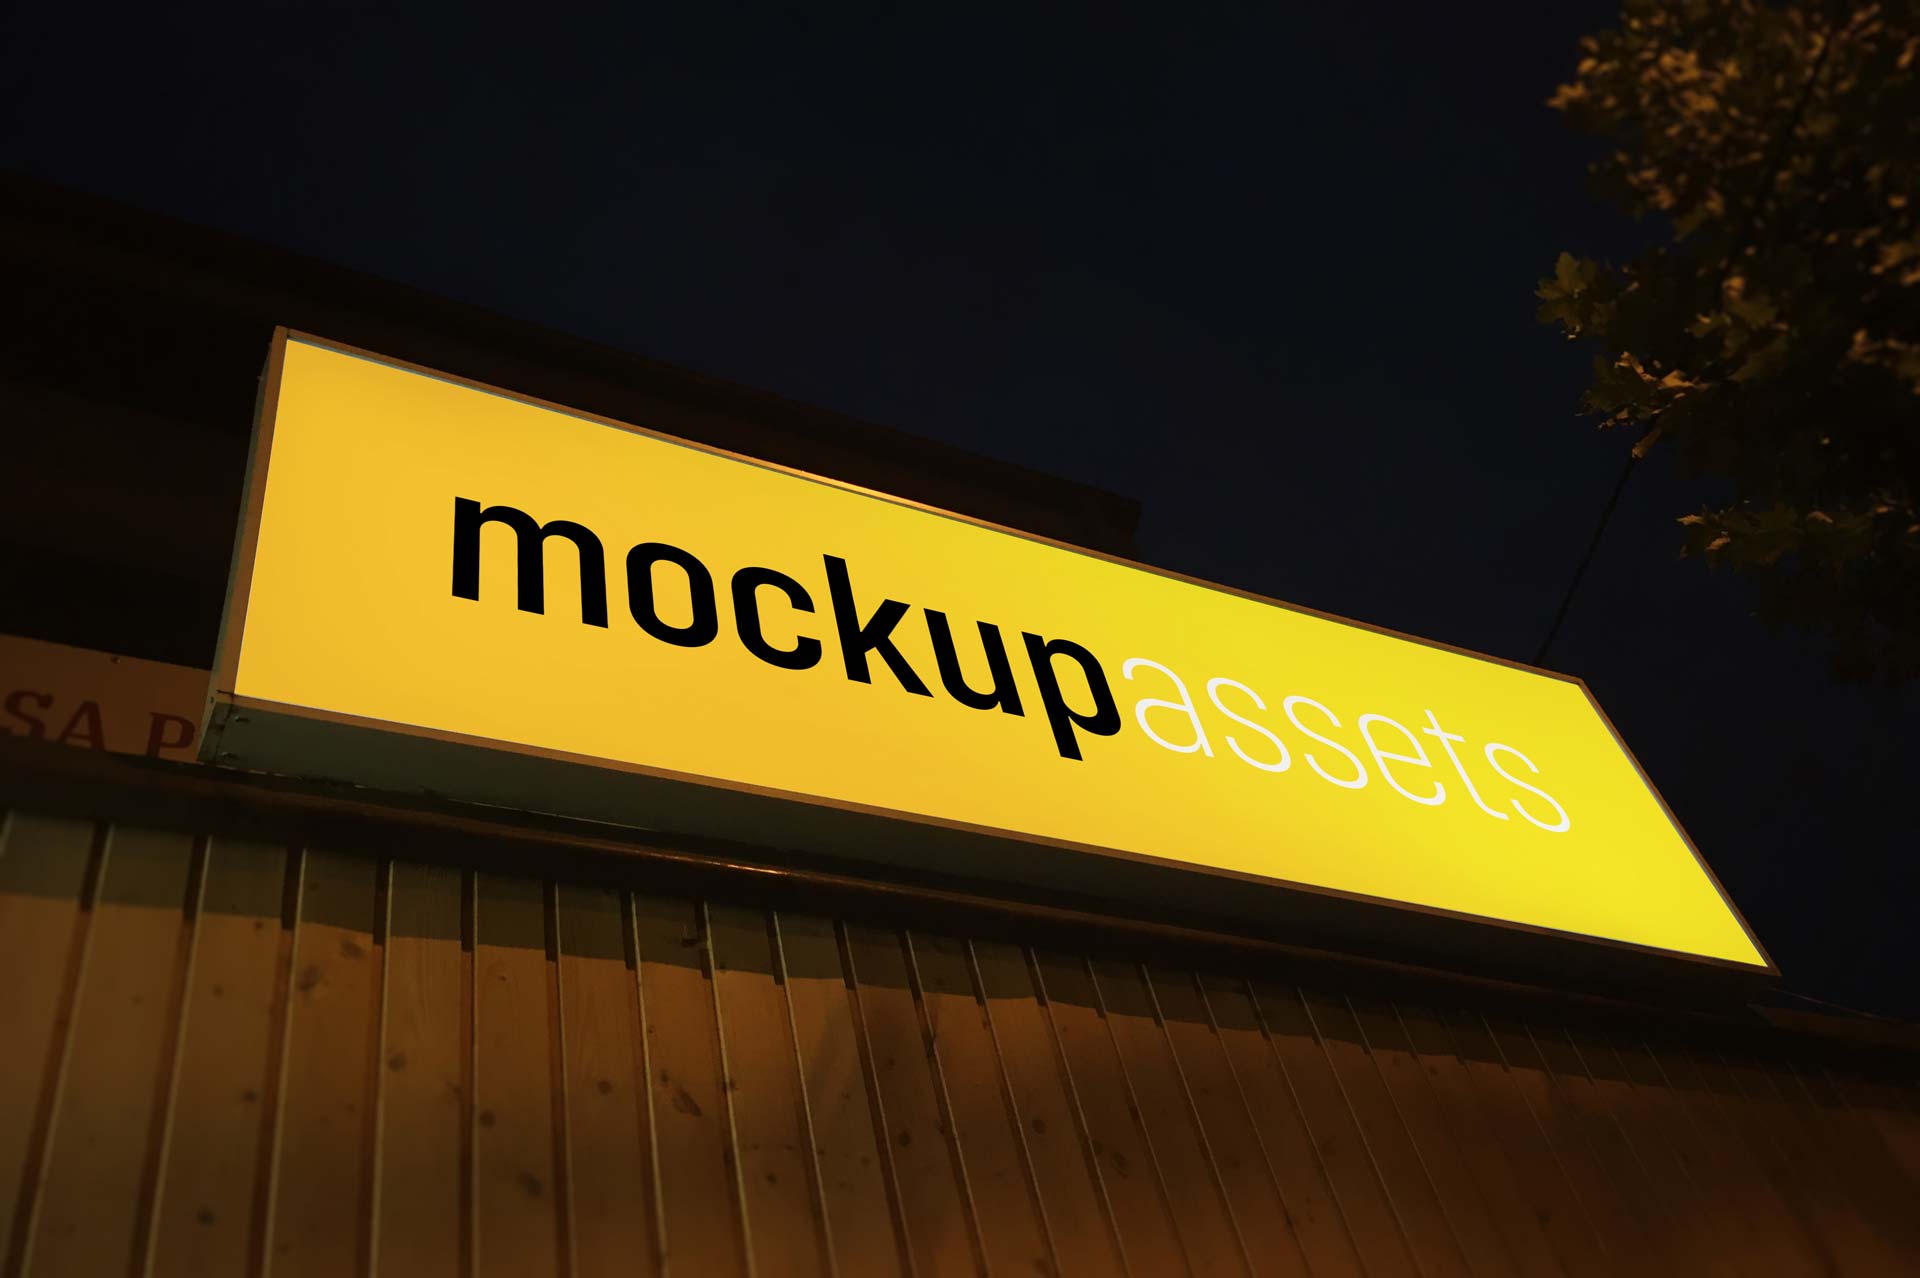 Rectangular Logo Signage Mockup in the Evening - With Background